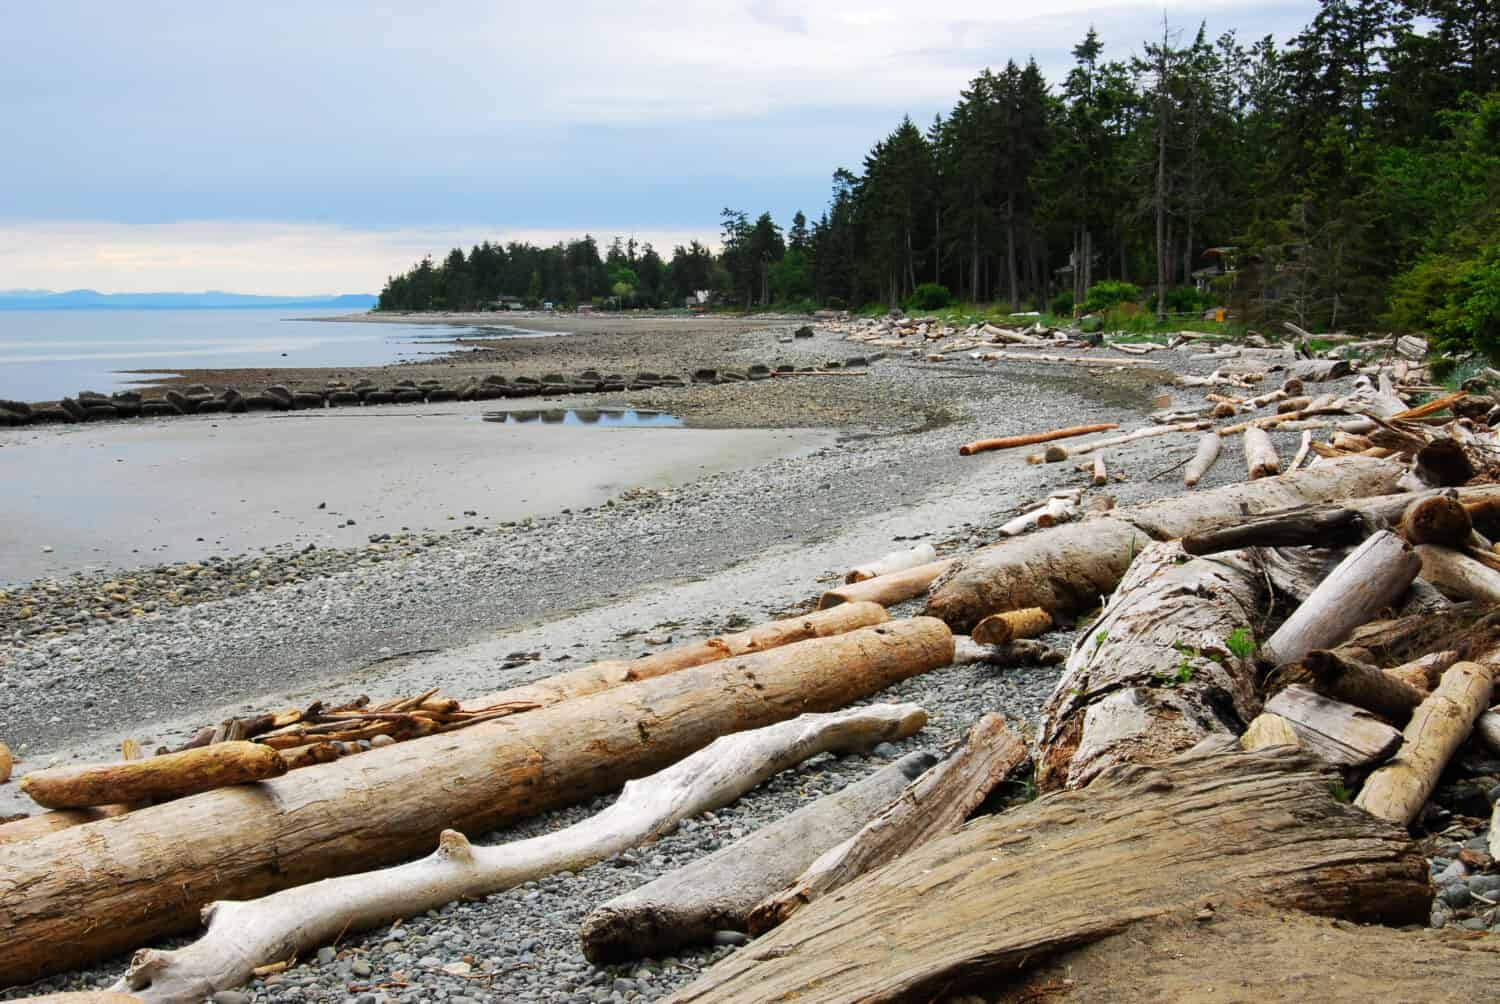 Logs on the peaceful qualicum beach, vancouver island, british columbia, canada